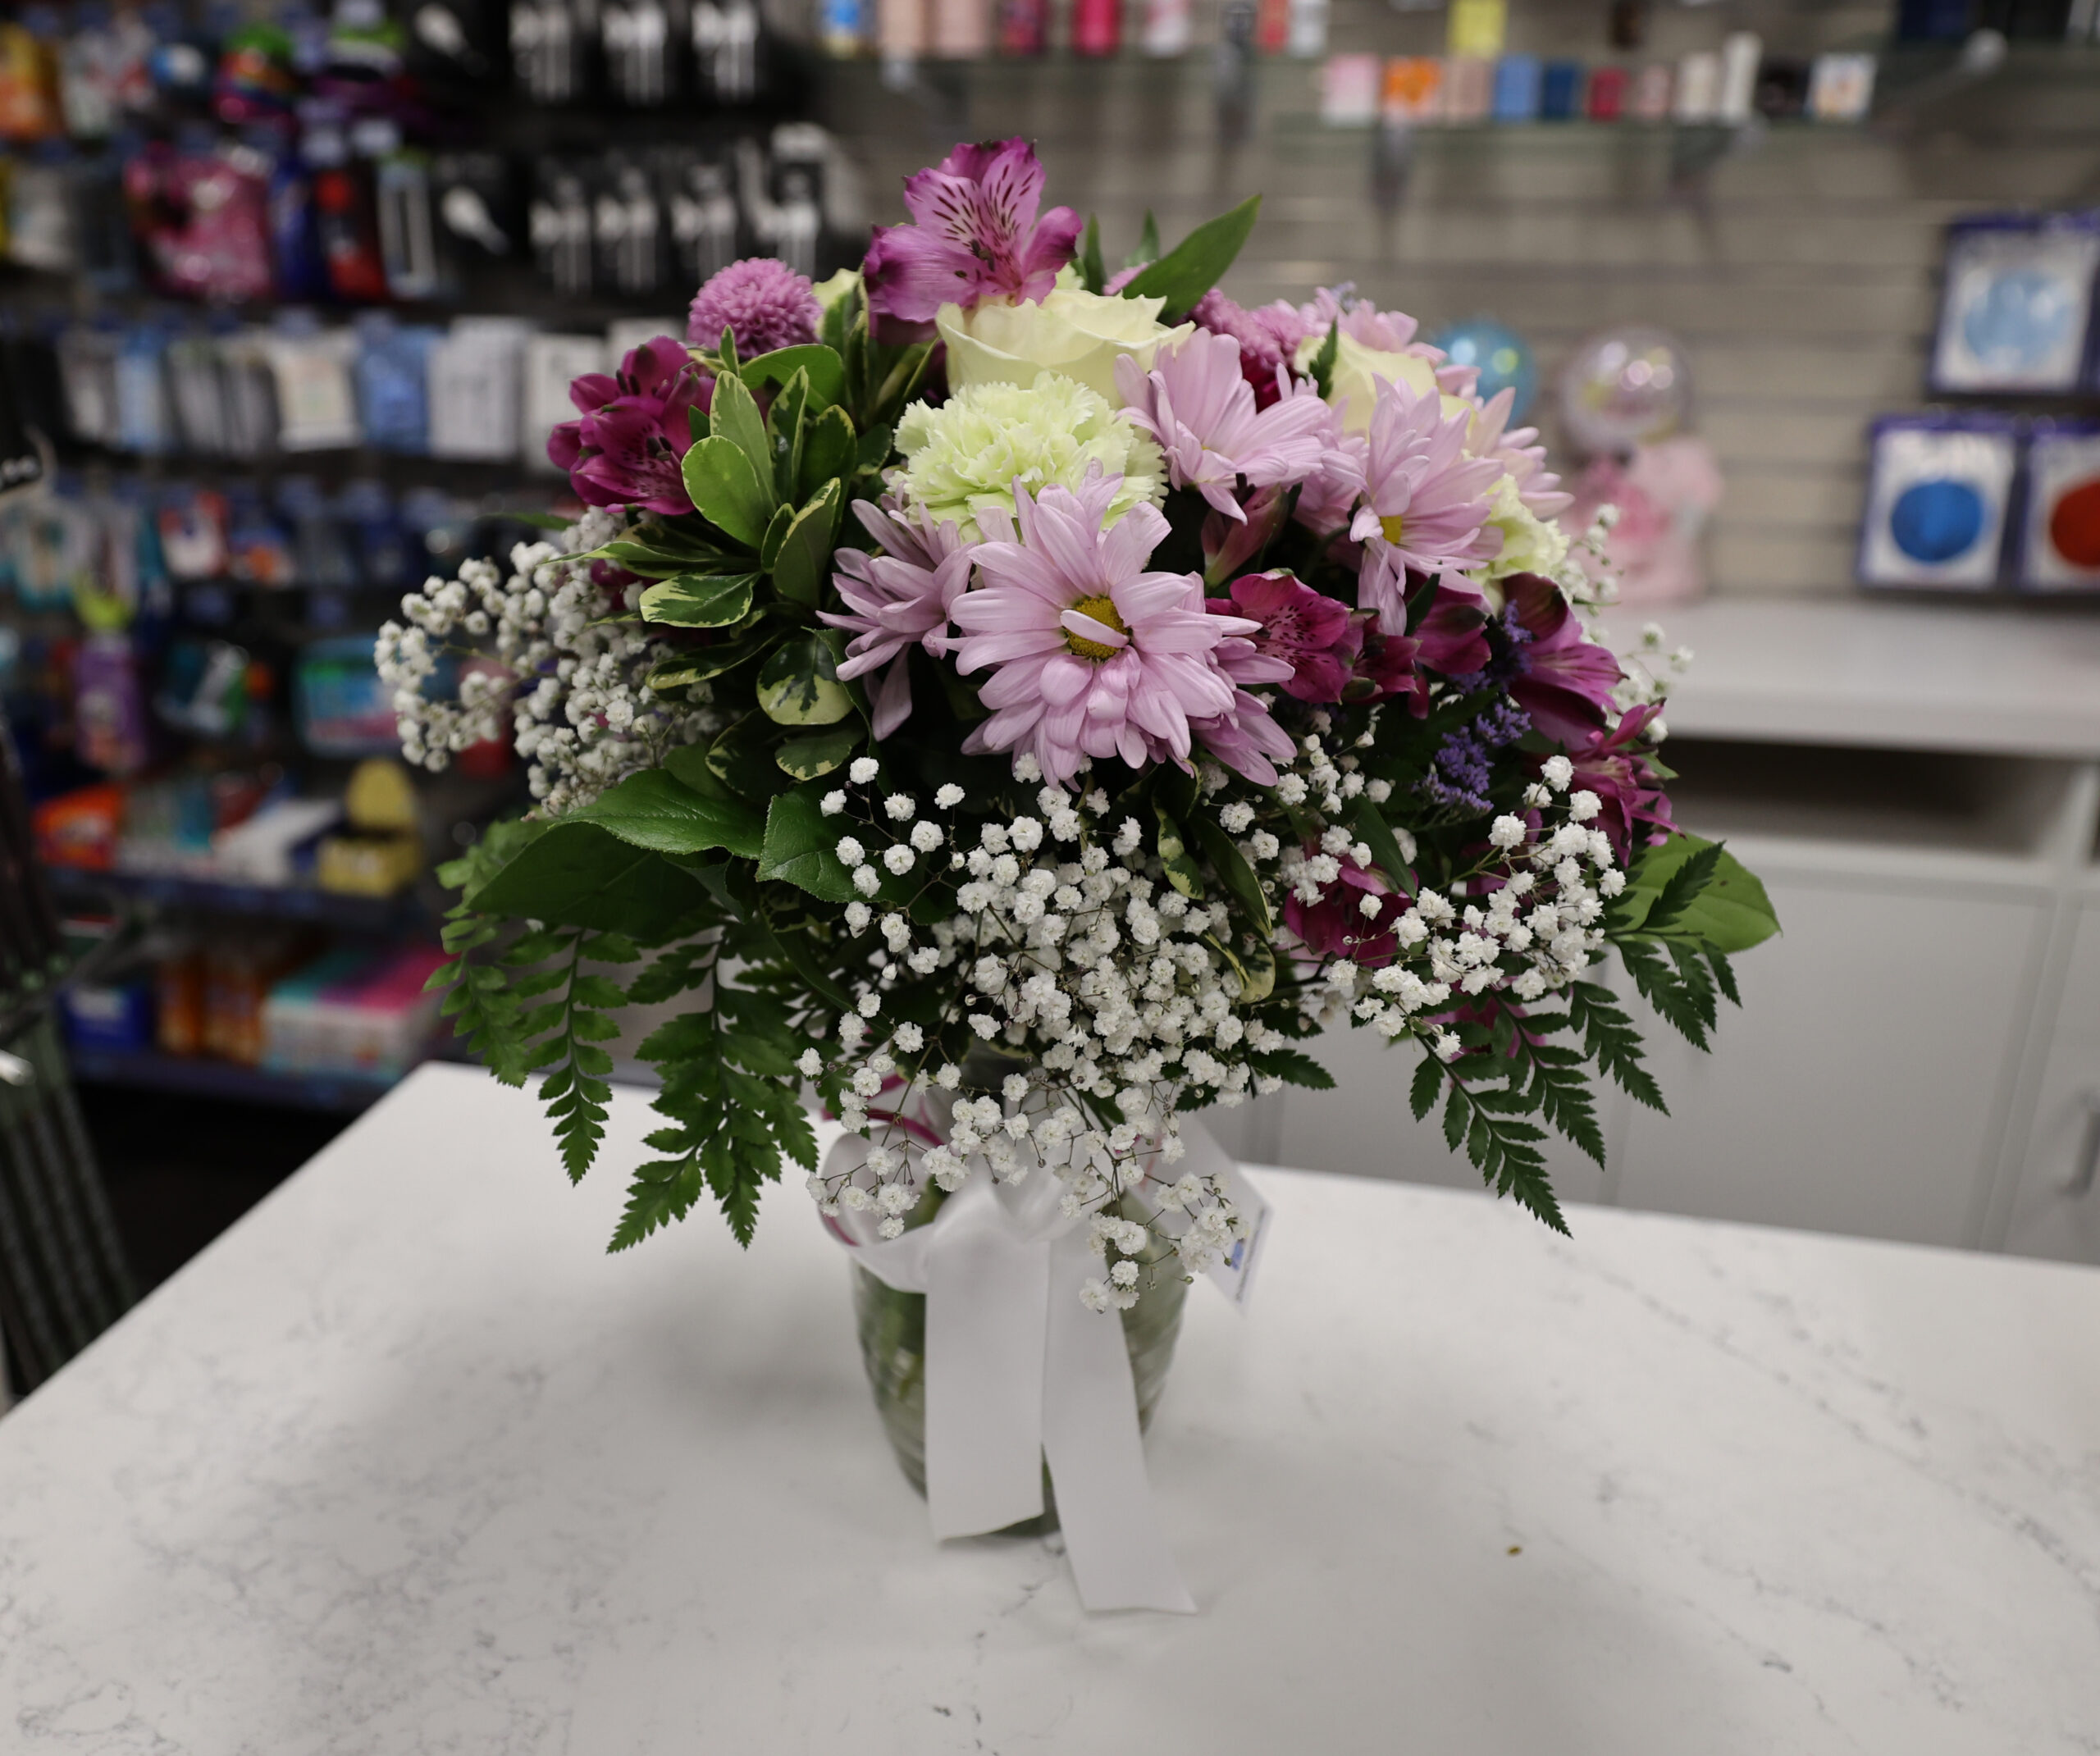 Cloverkey Gift Shop at Medical City Arlington Hospital - Floral Arrangement